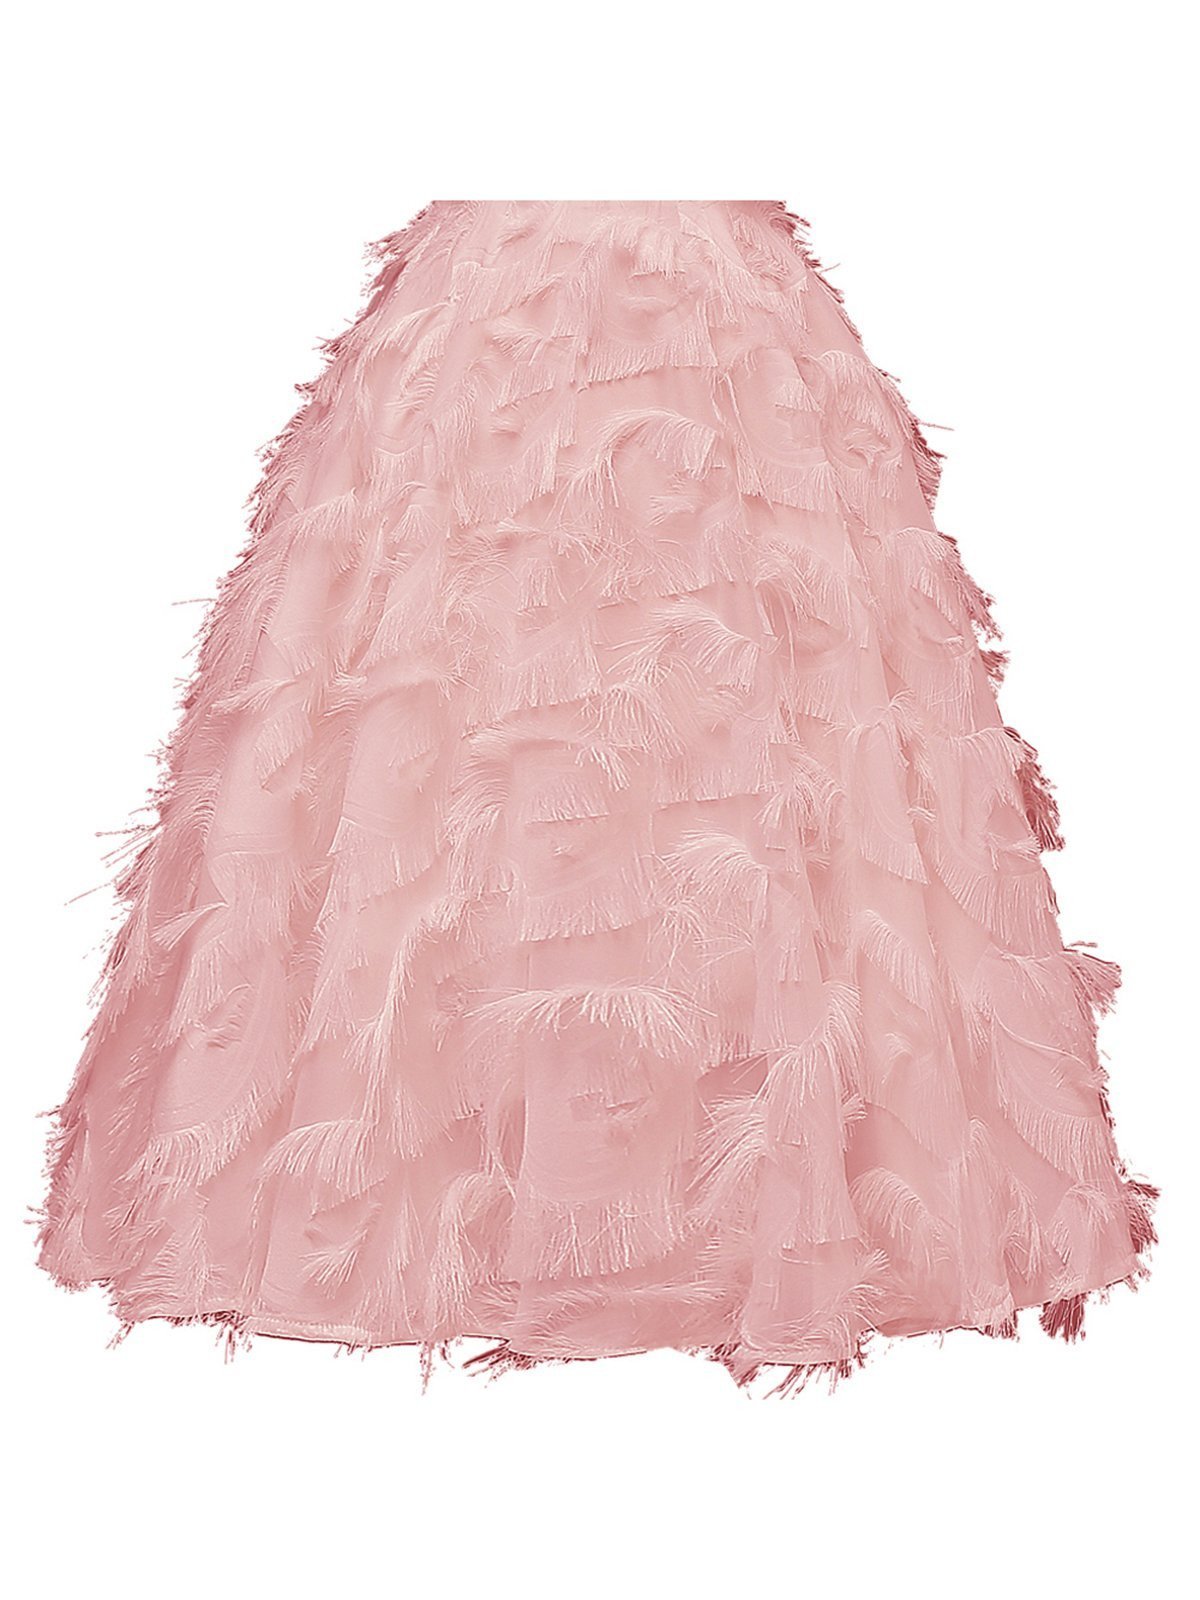 1950s Cold Shoulder Ruffle Tassel Dress